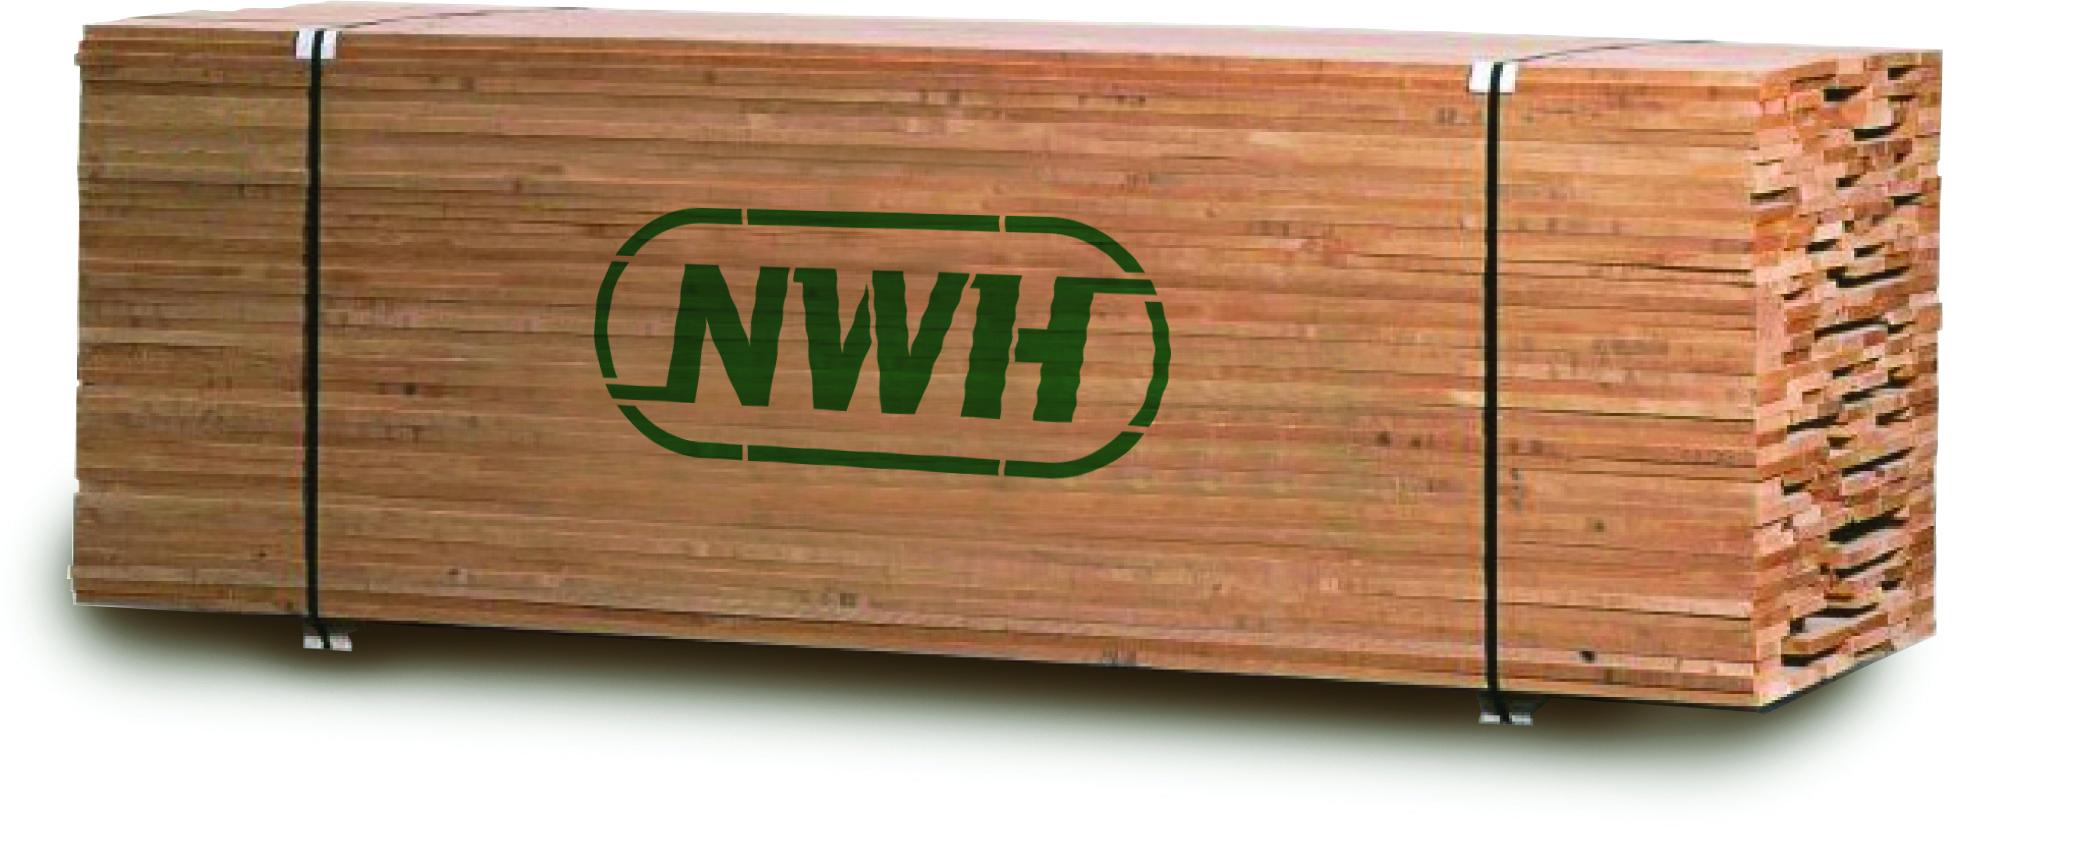 Northwest Hardwoods lumber